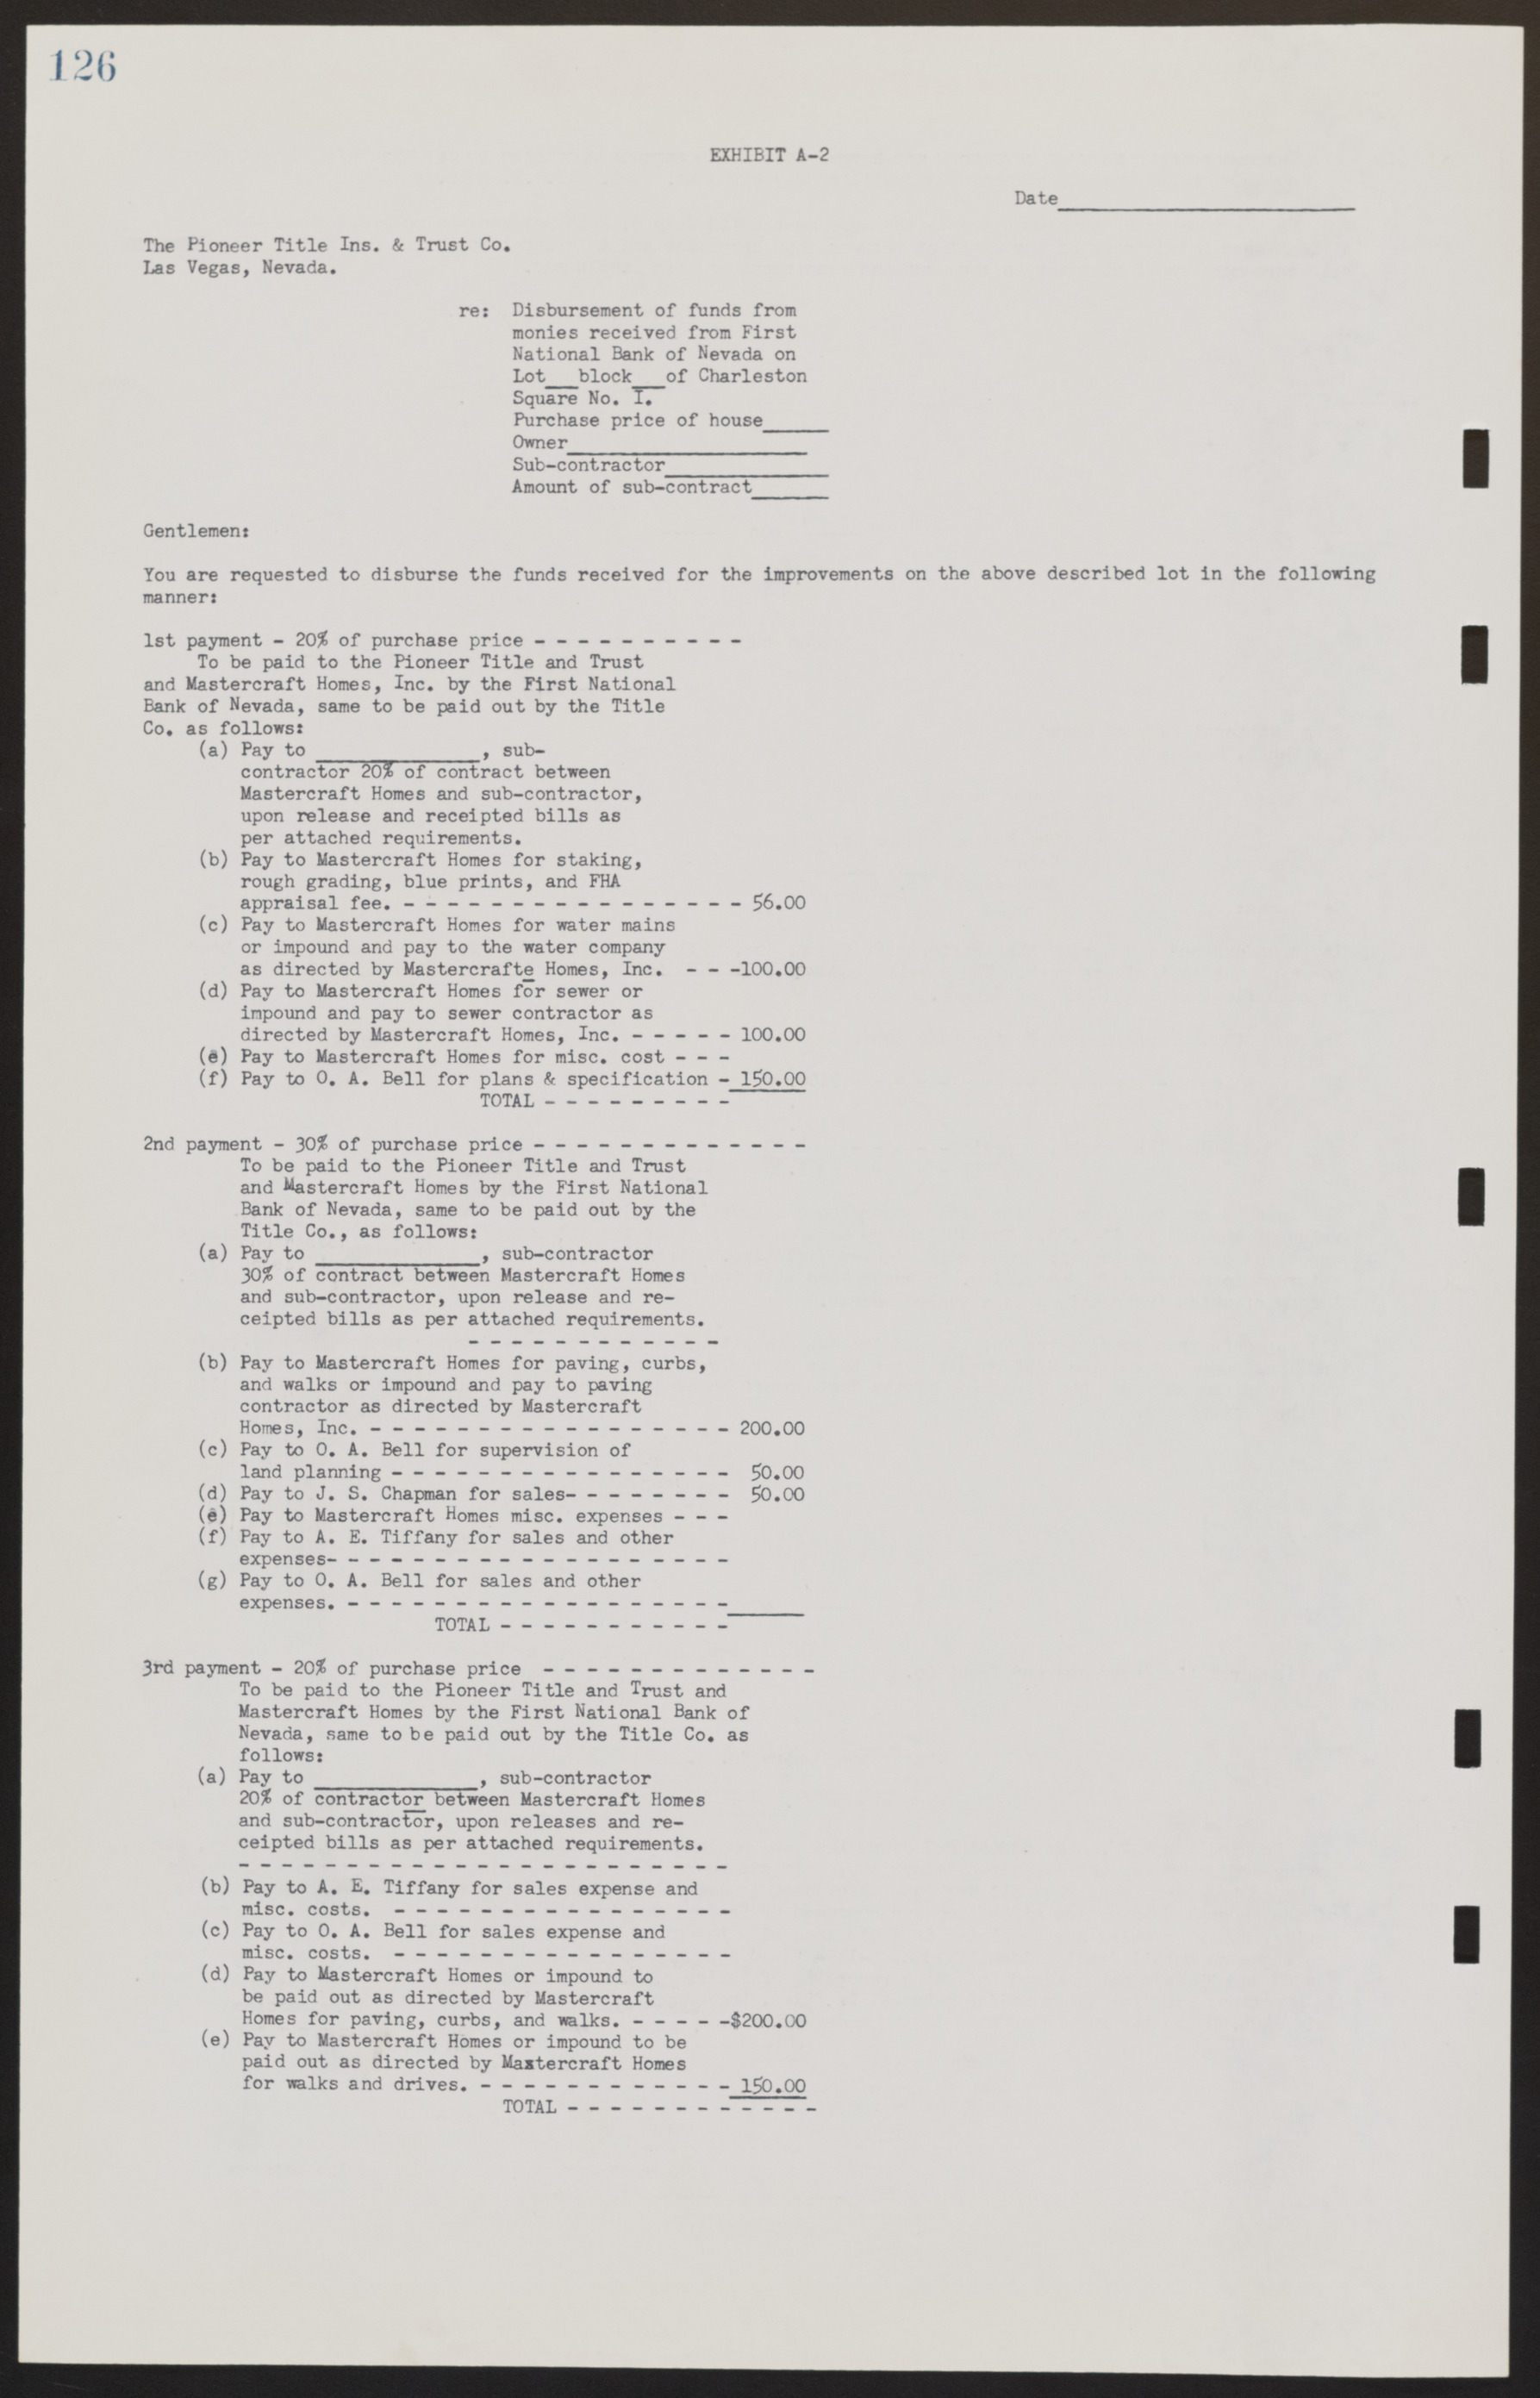 Las Vegas City Commission Legal Documents, February 29, 1944 to February 21, 1945, lvc000016-56